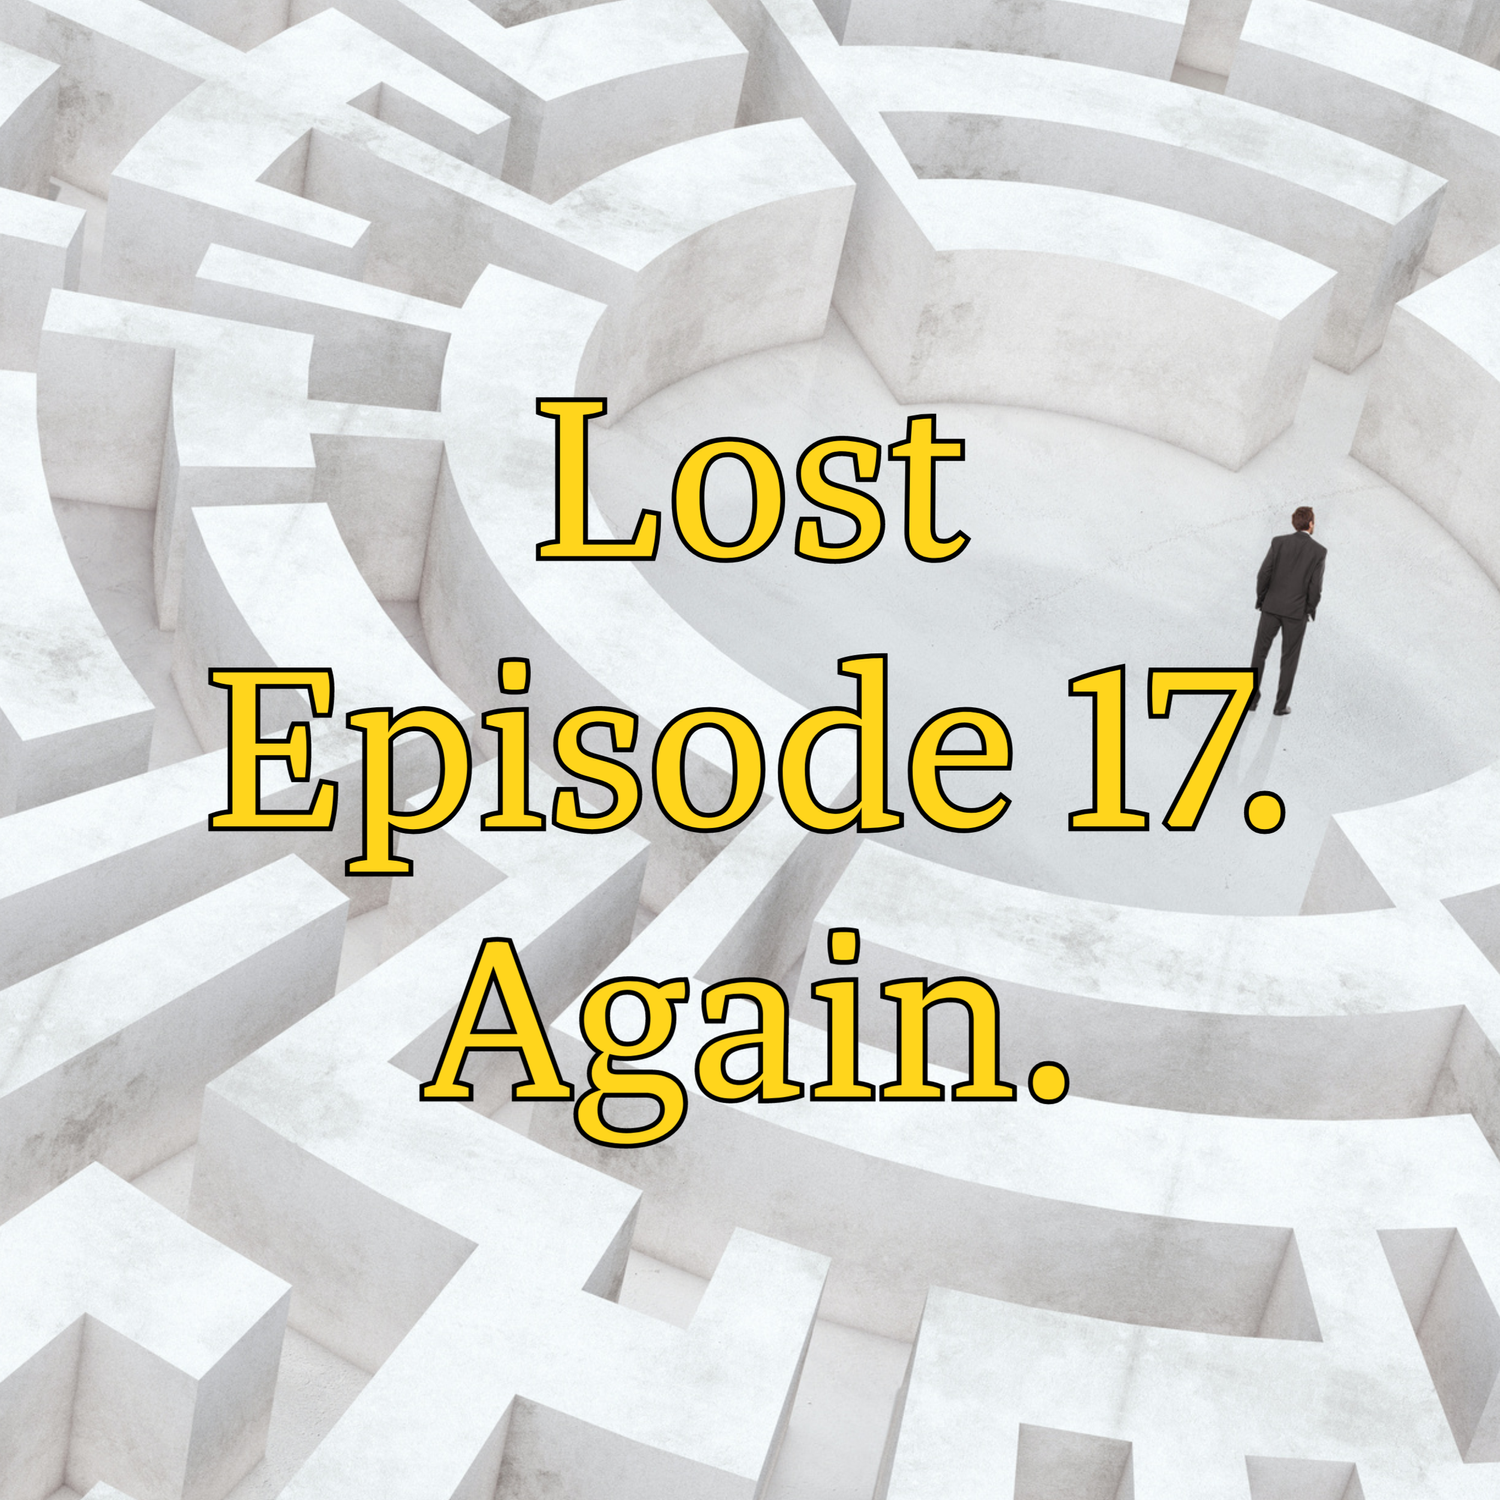 Lost Episode 17. Again.